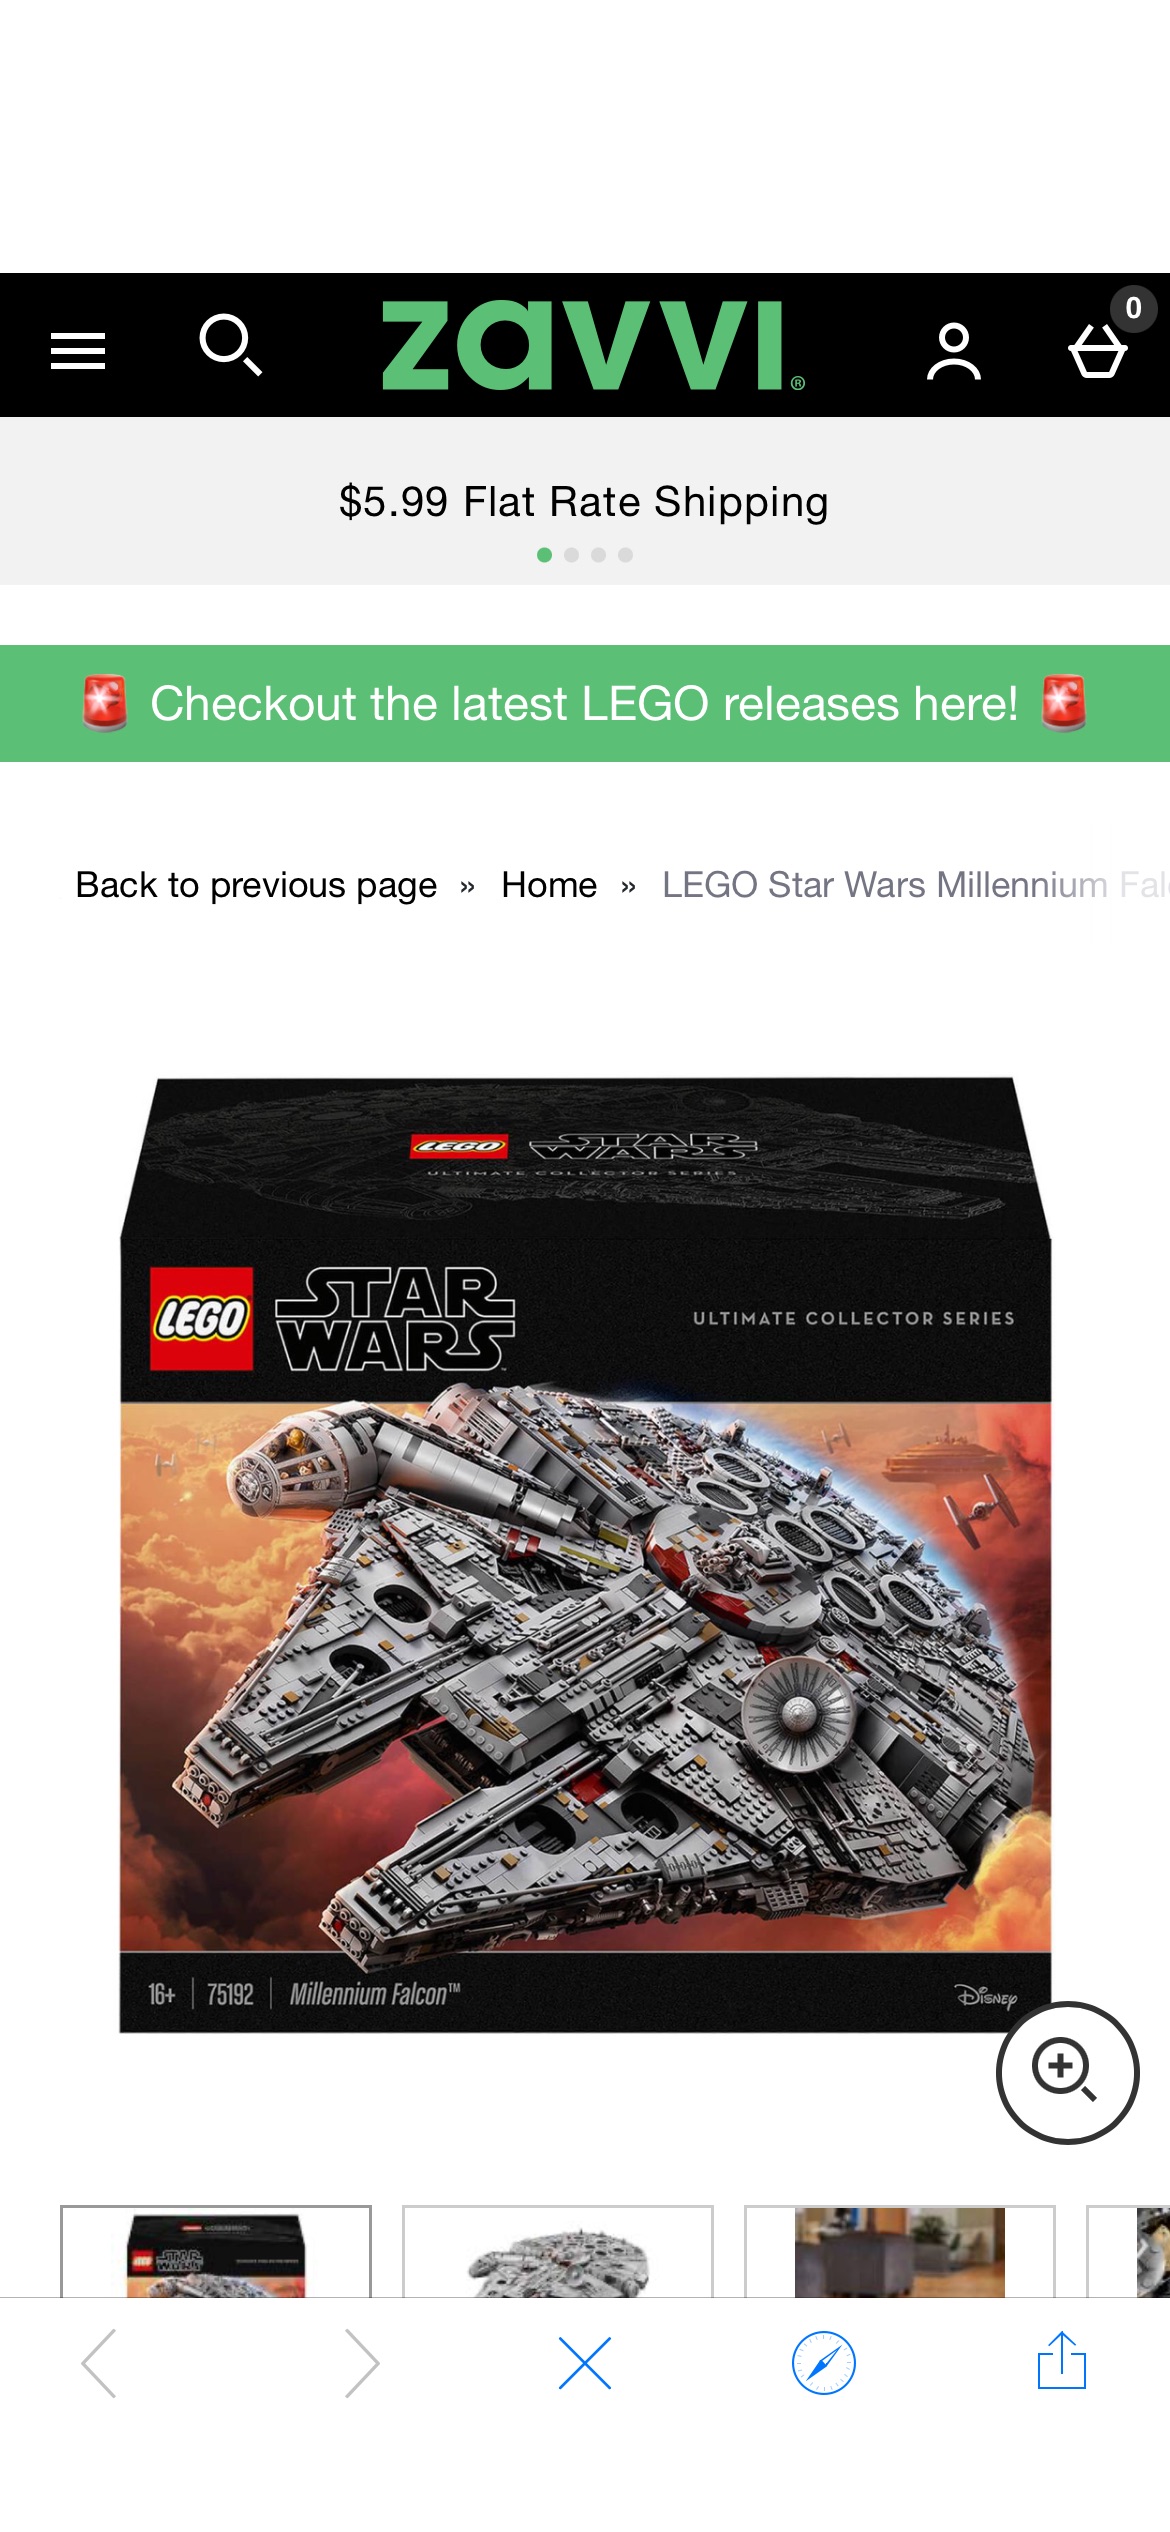 LEGO Star Wars Millennium Falcon Collector Series Set (75192) Toys - Zavvi US